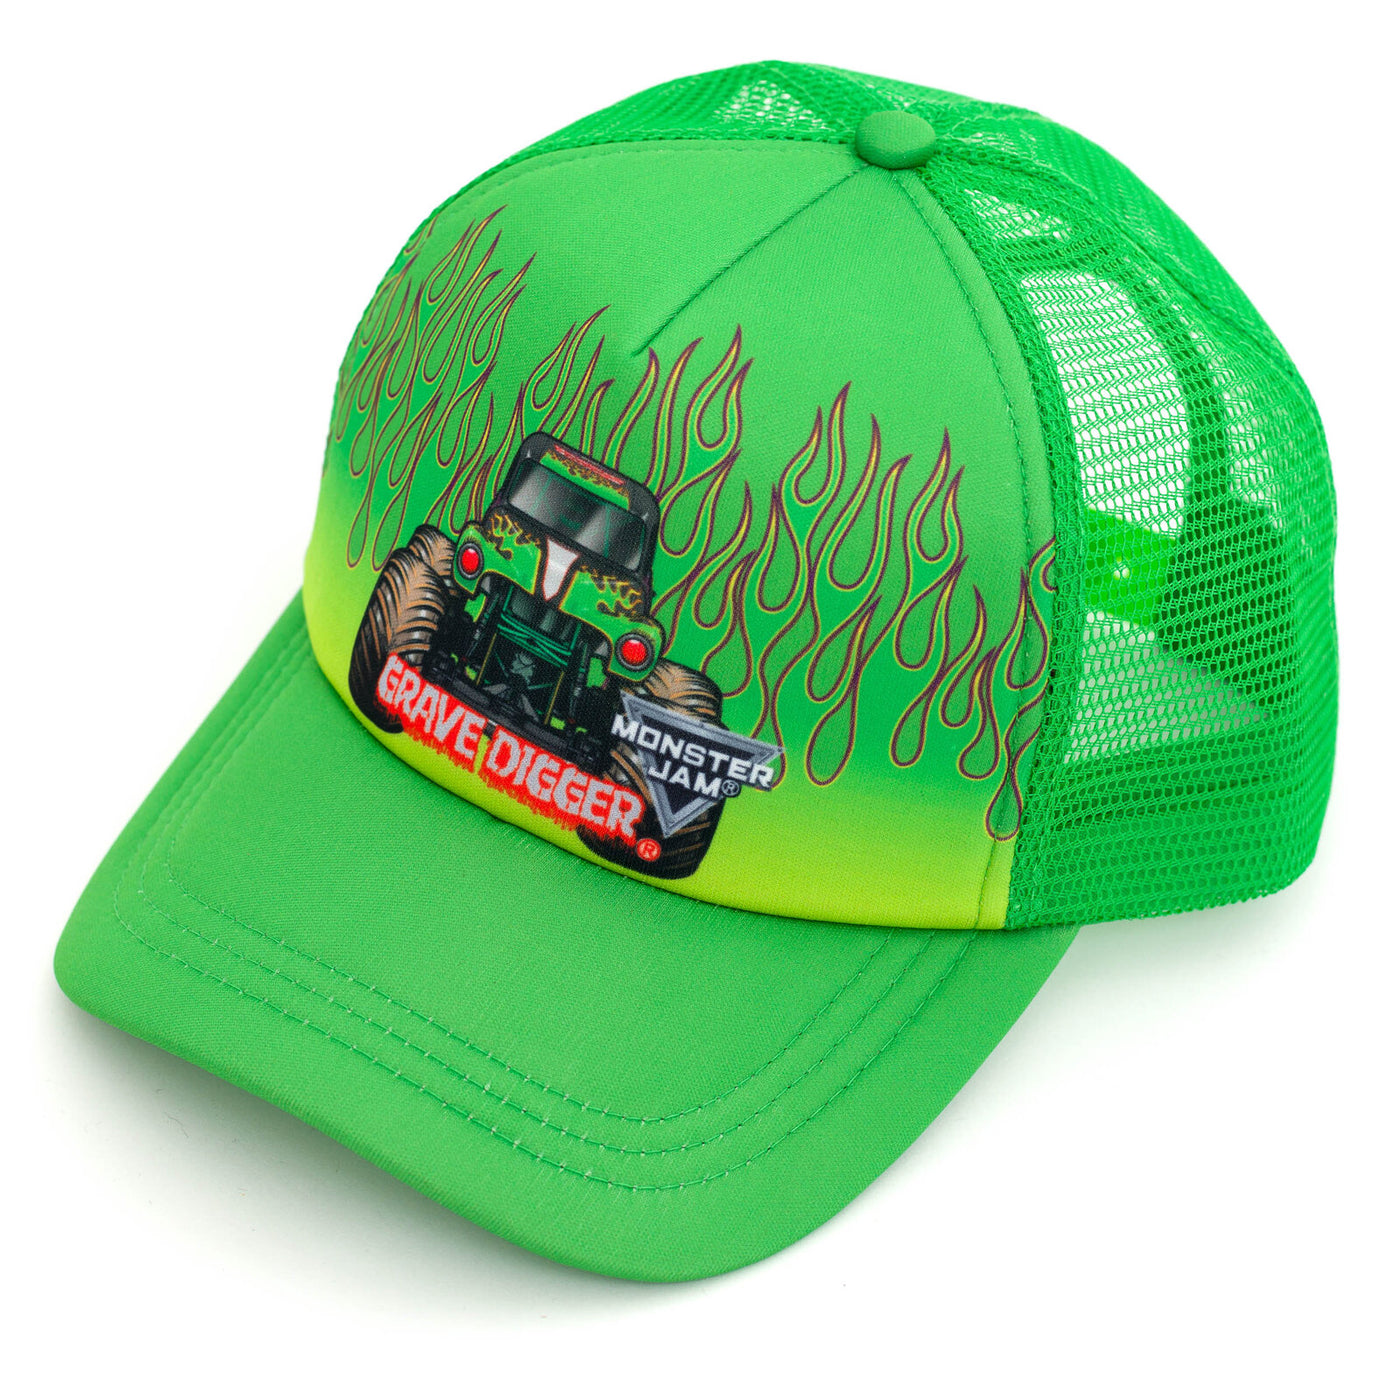 Monster Jam Grave Digger Mesh Adjustable Snapback Baseball Cap Hat